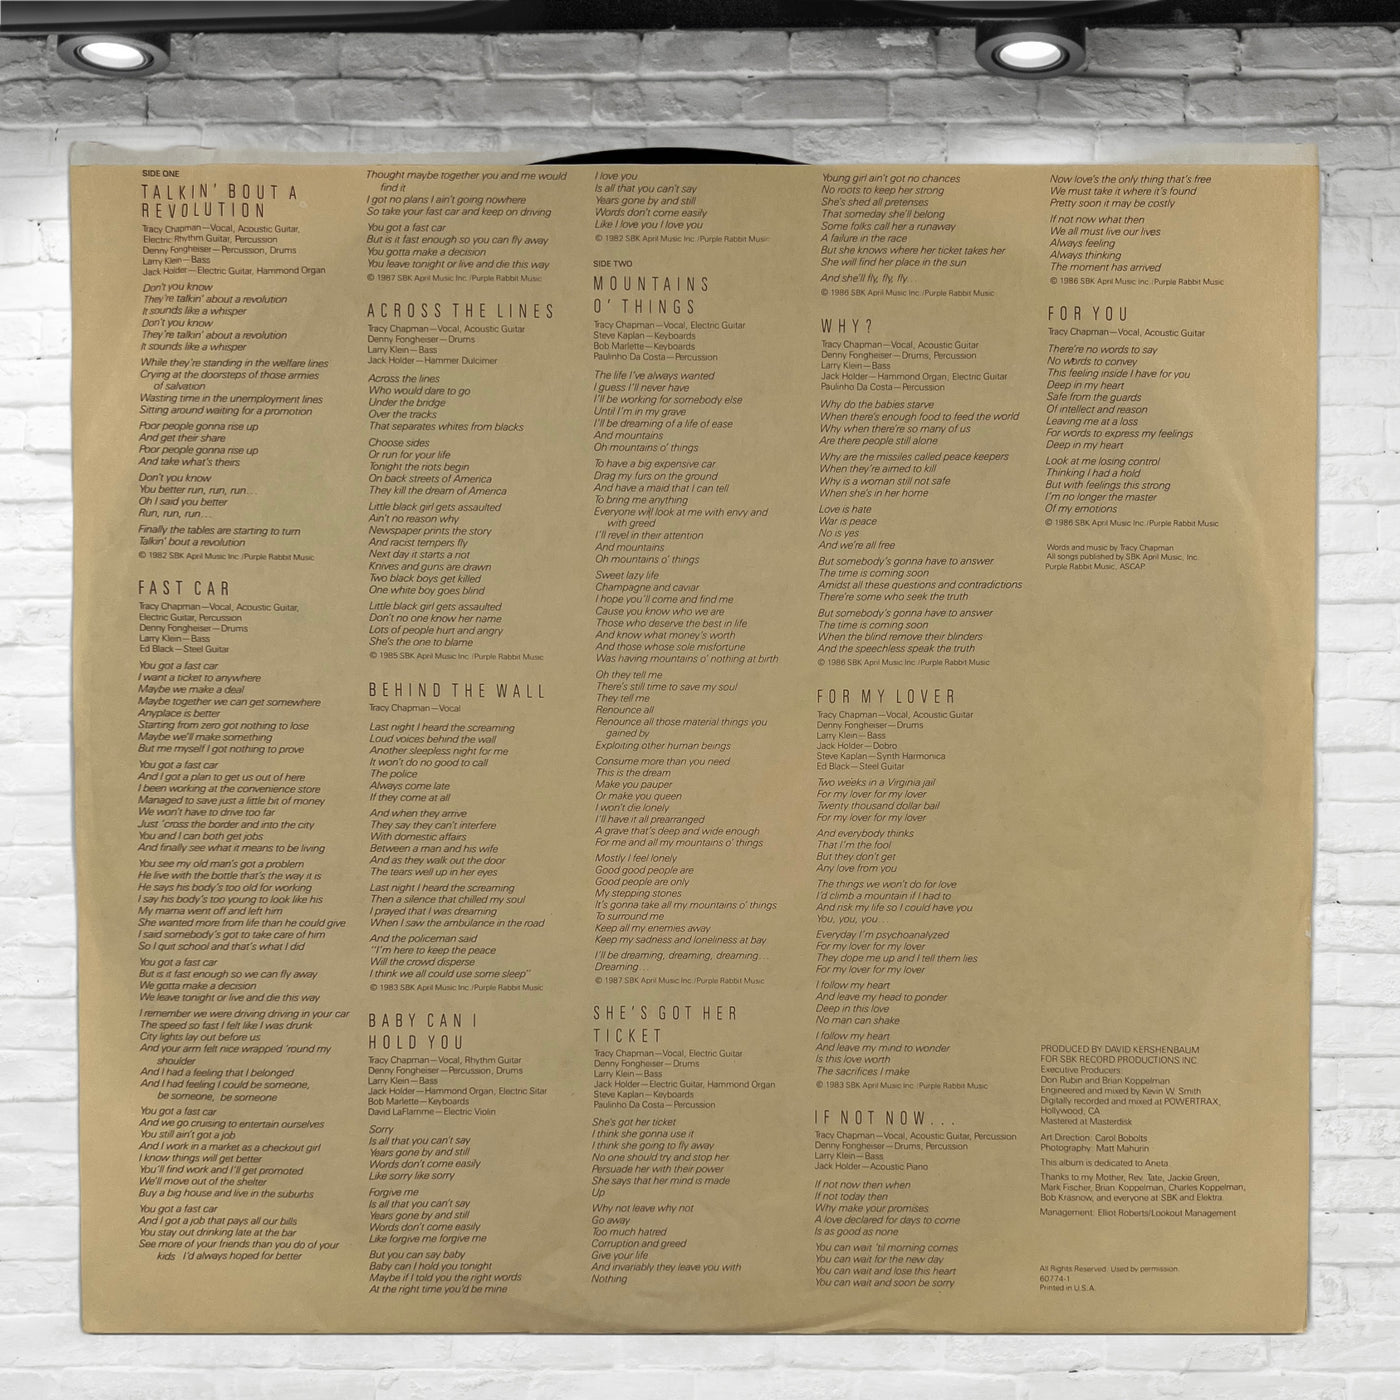 Vintage Original Tracy Chapman 1988 Self Titled Vinyl Album.